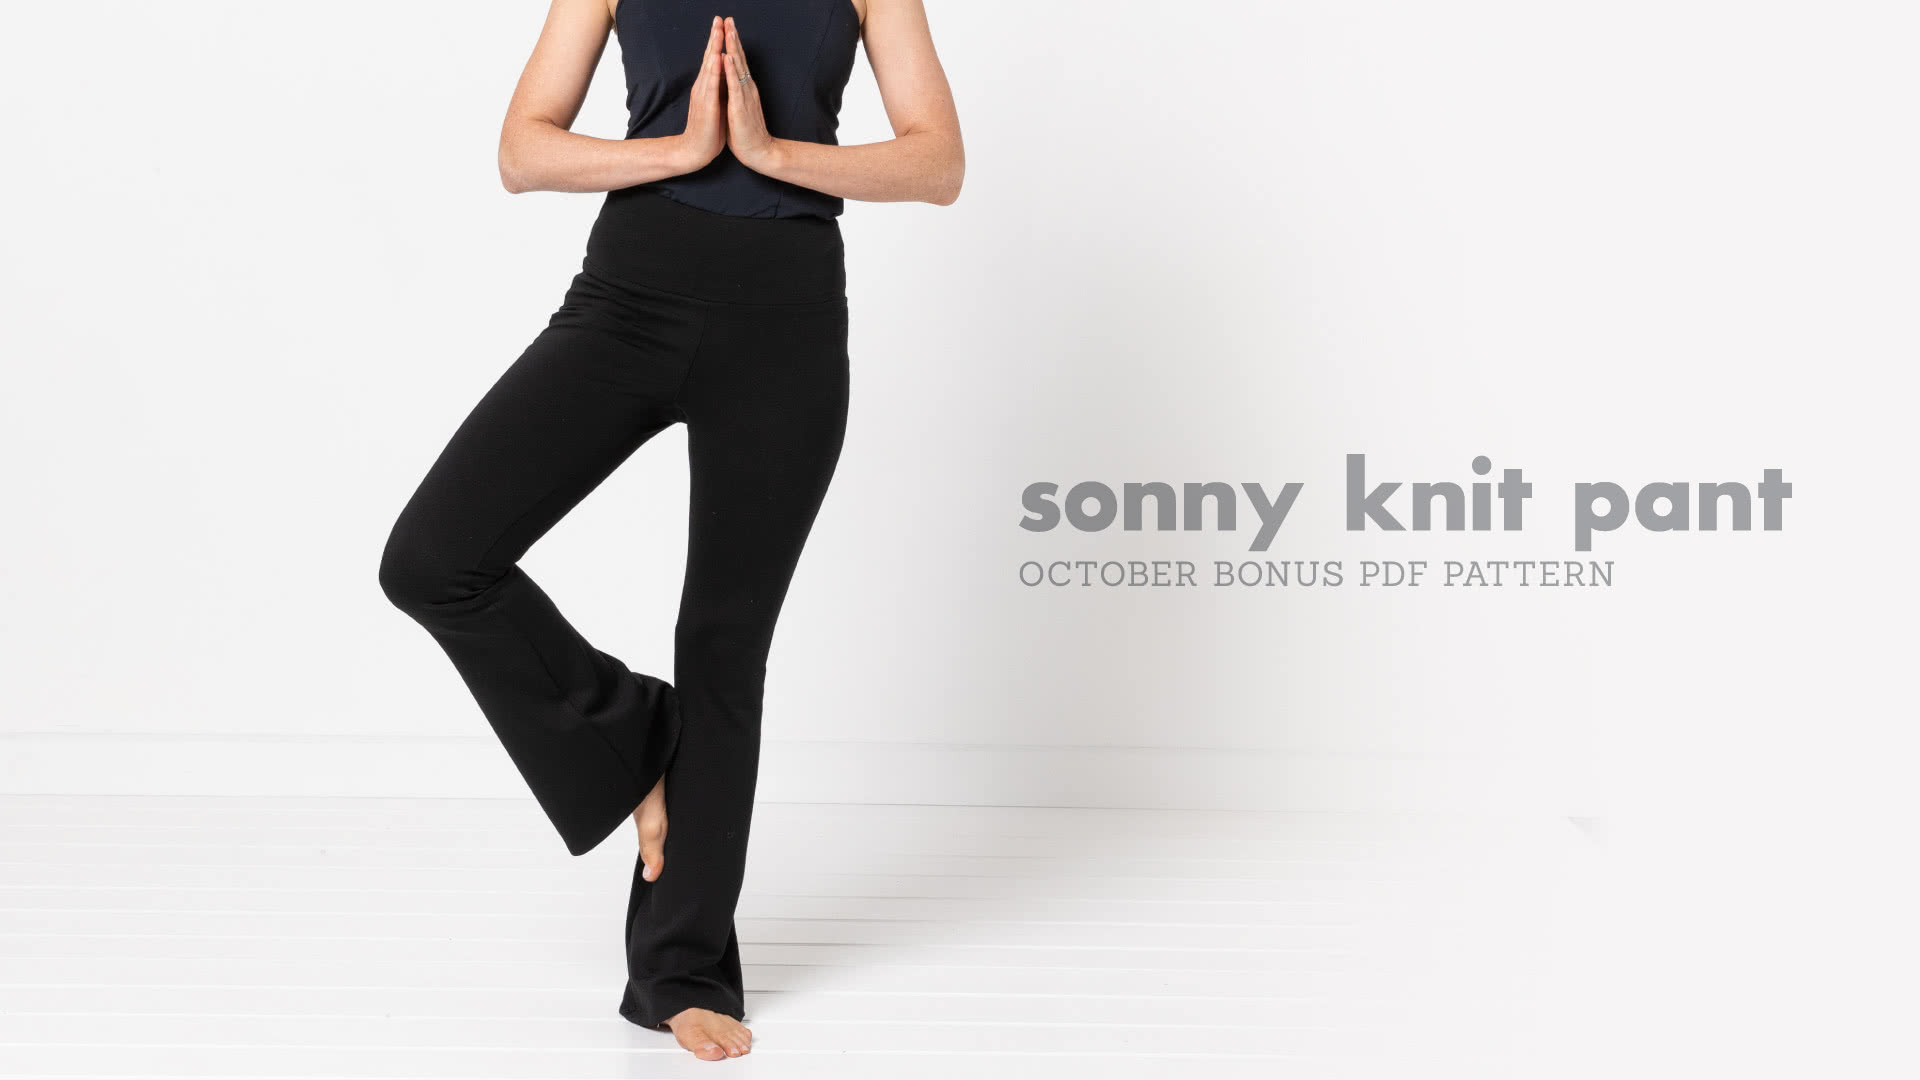 Sonny Knit Pant PDF